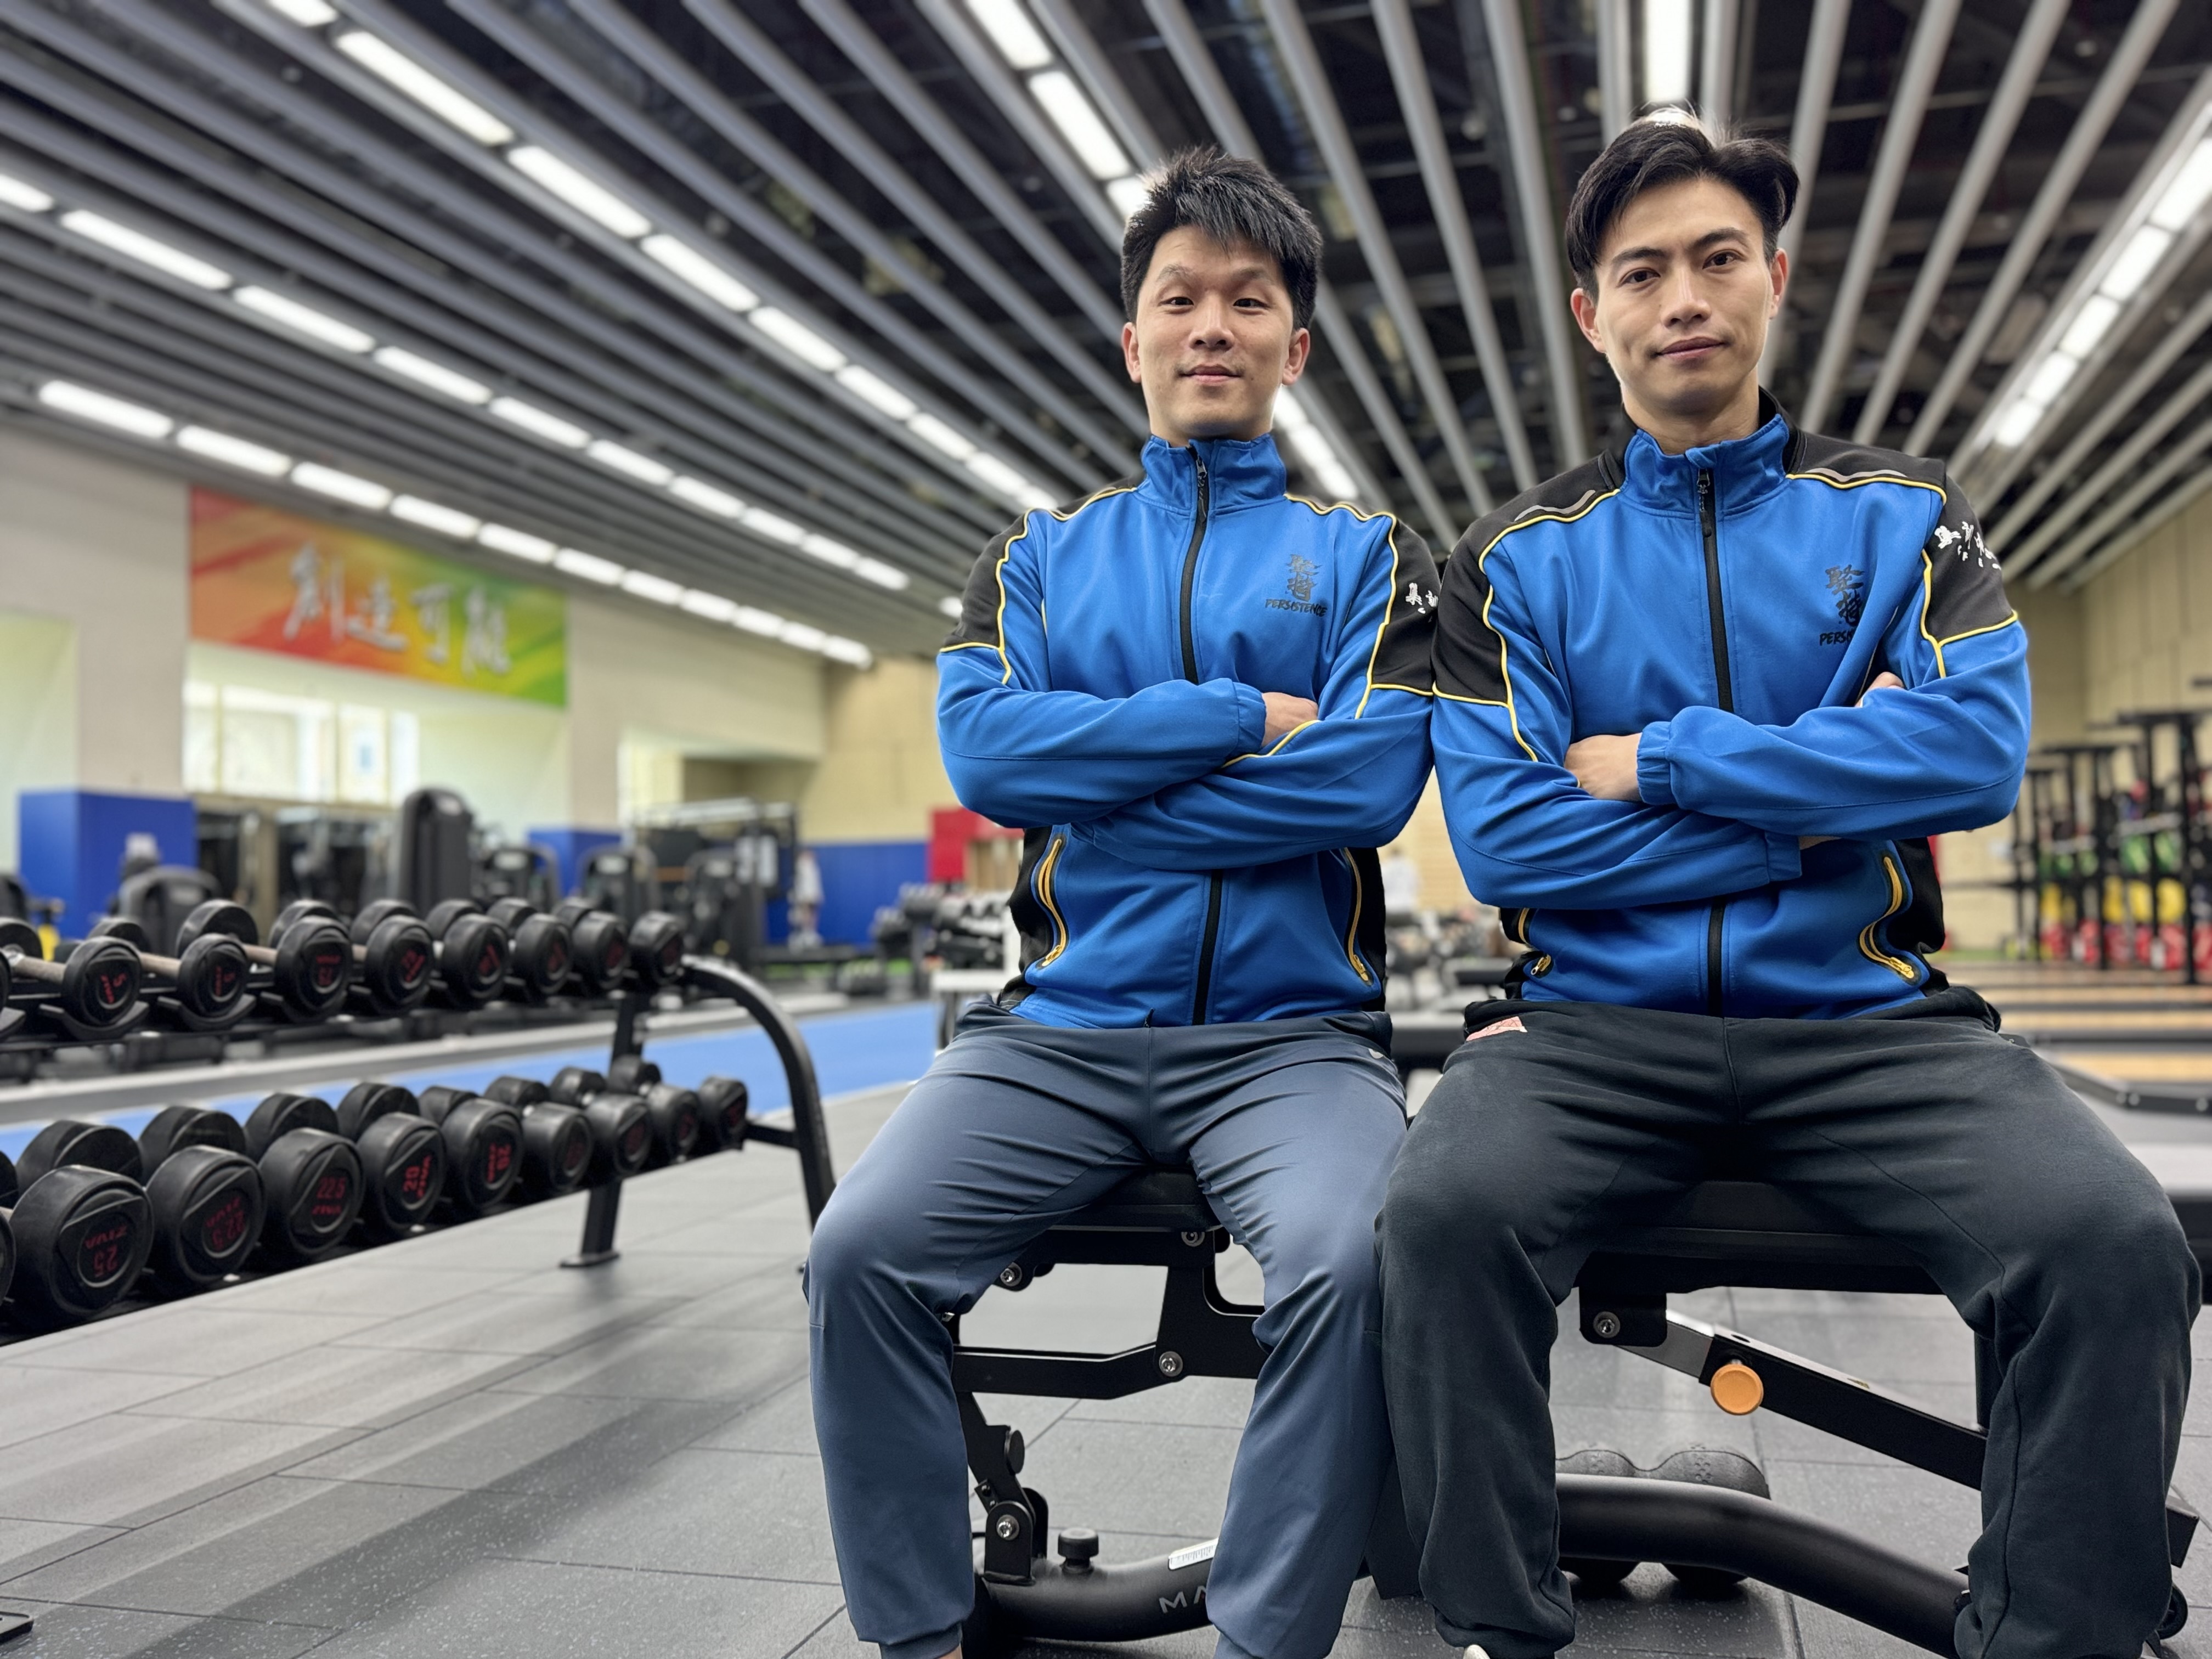 A1  劉富賢(右)與彭逸龍同為運動員出身，現在以自身經驗和學問回饋給其他後進。.jpg